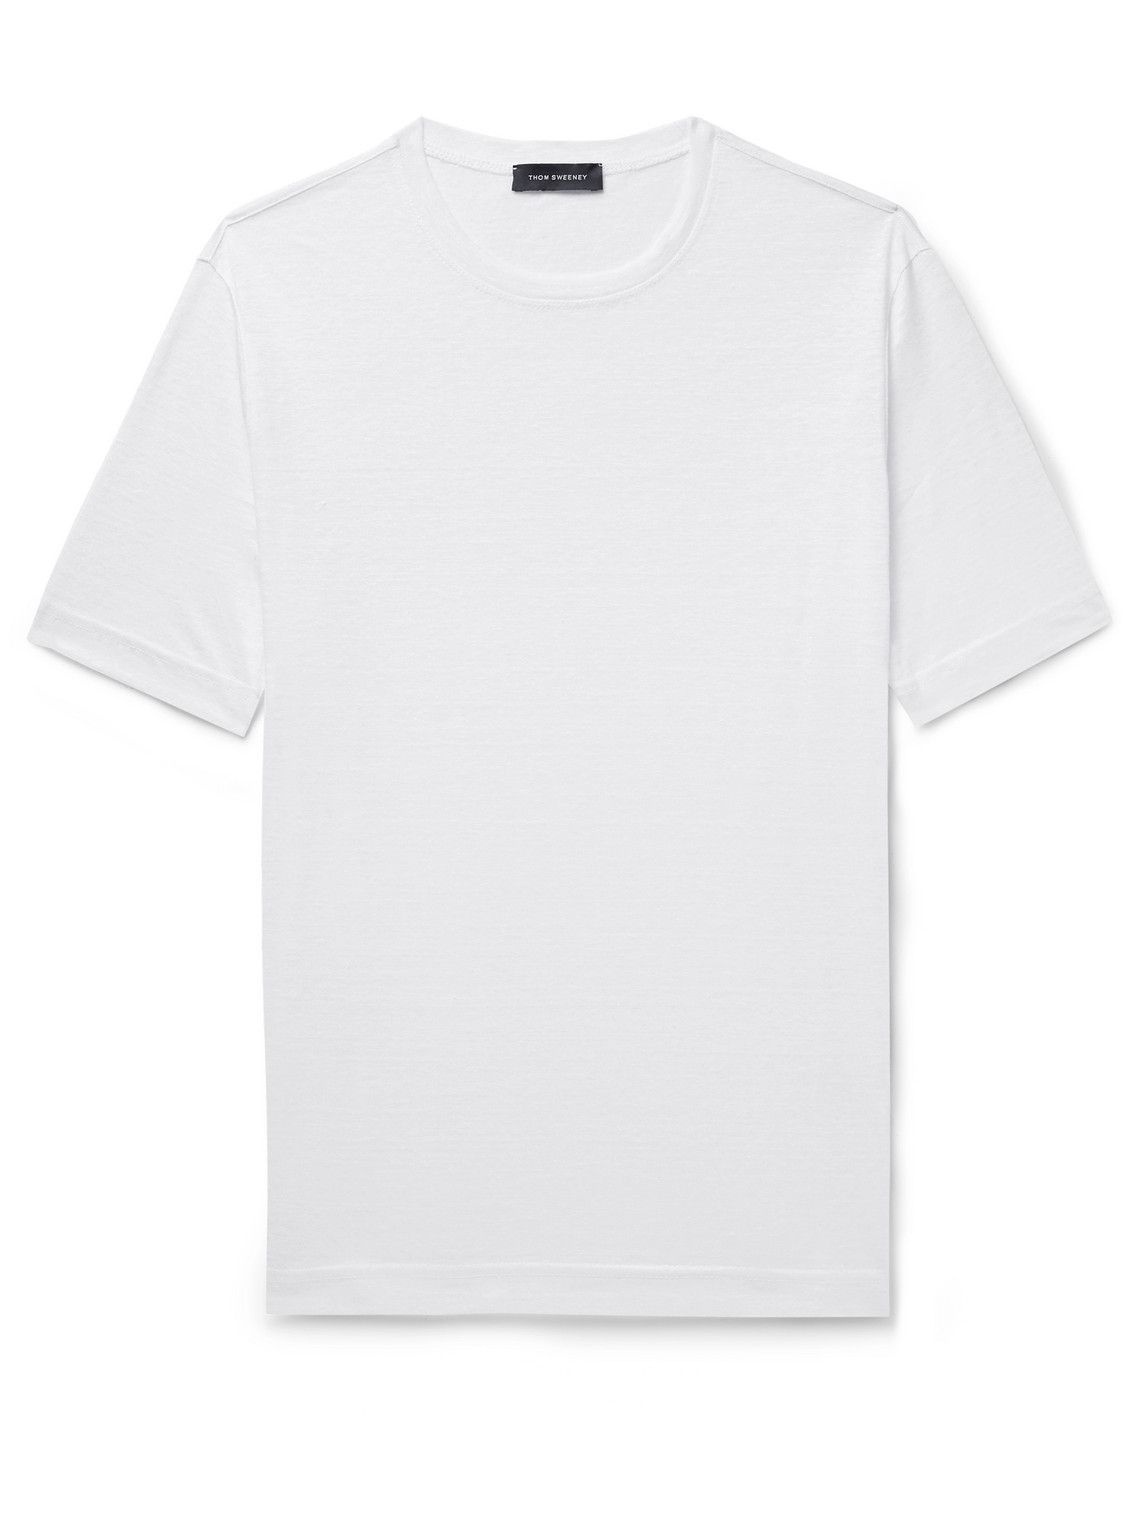 Thom Sweeney - Slub Linen T-Shirt - White Thom Sweeney